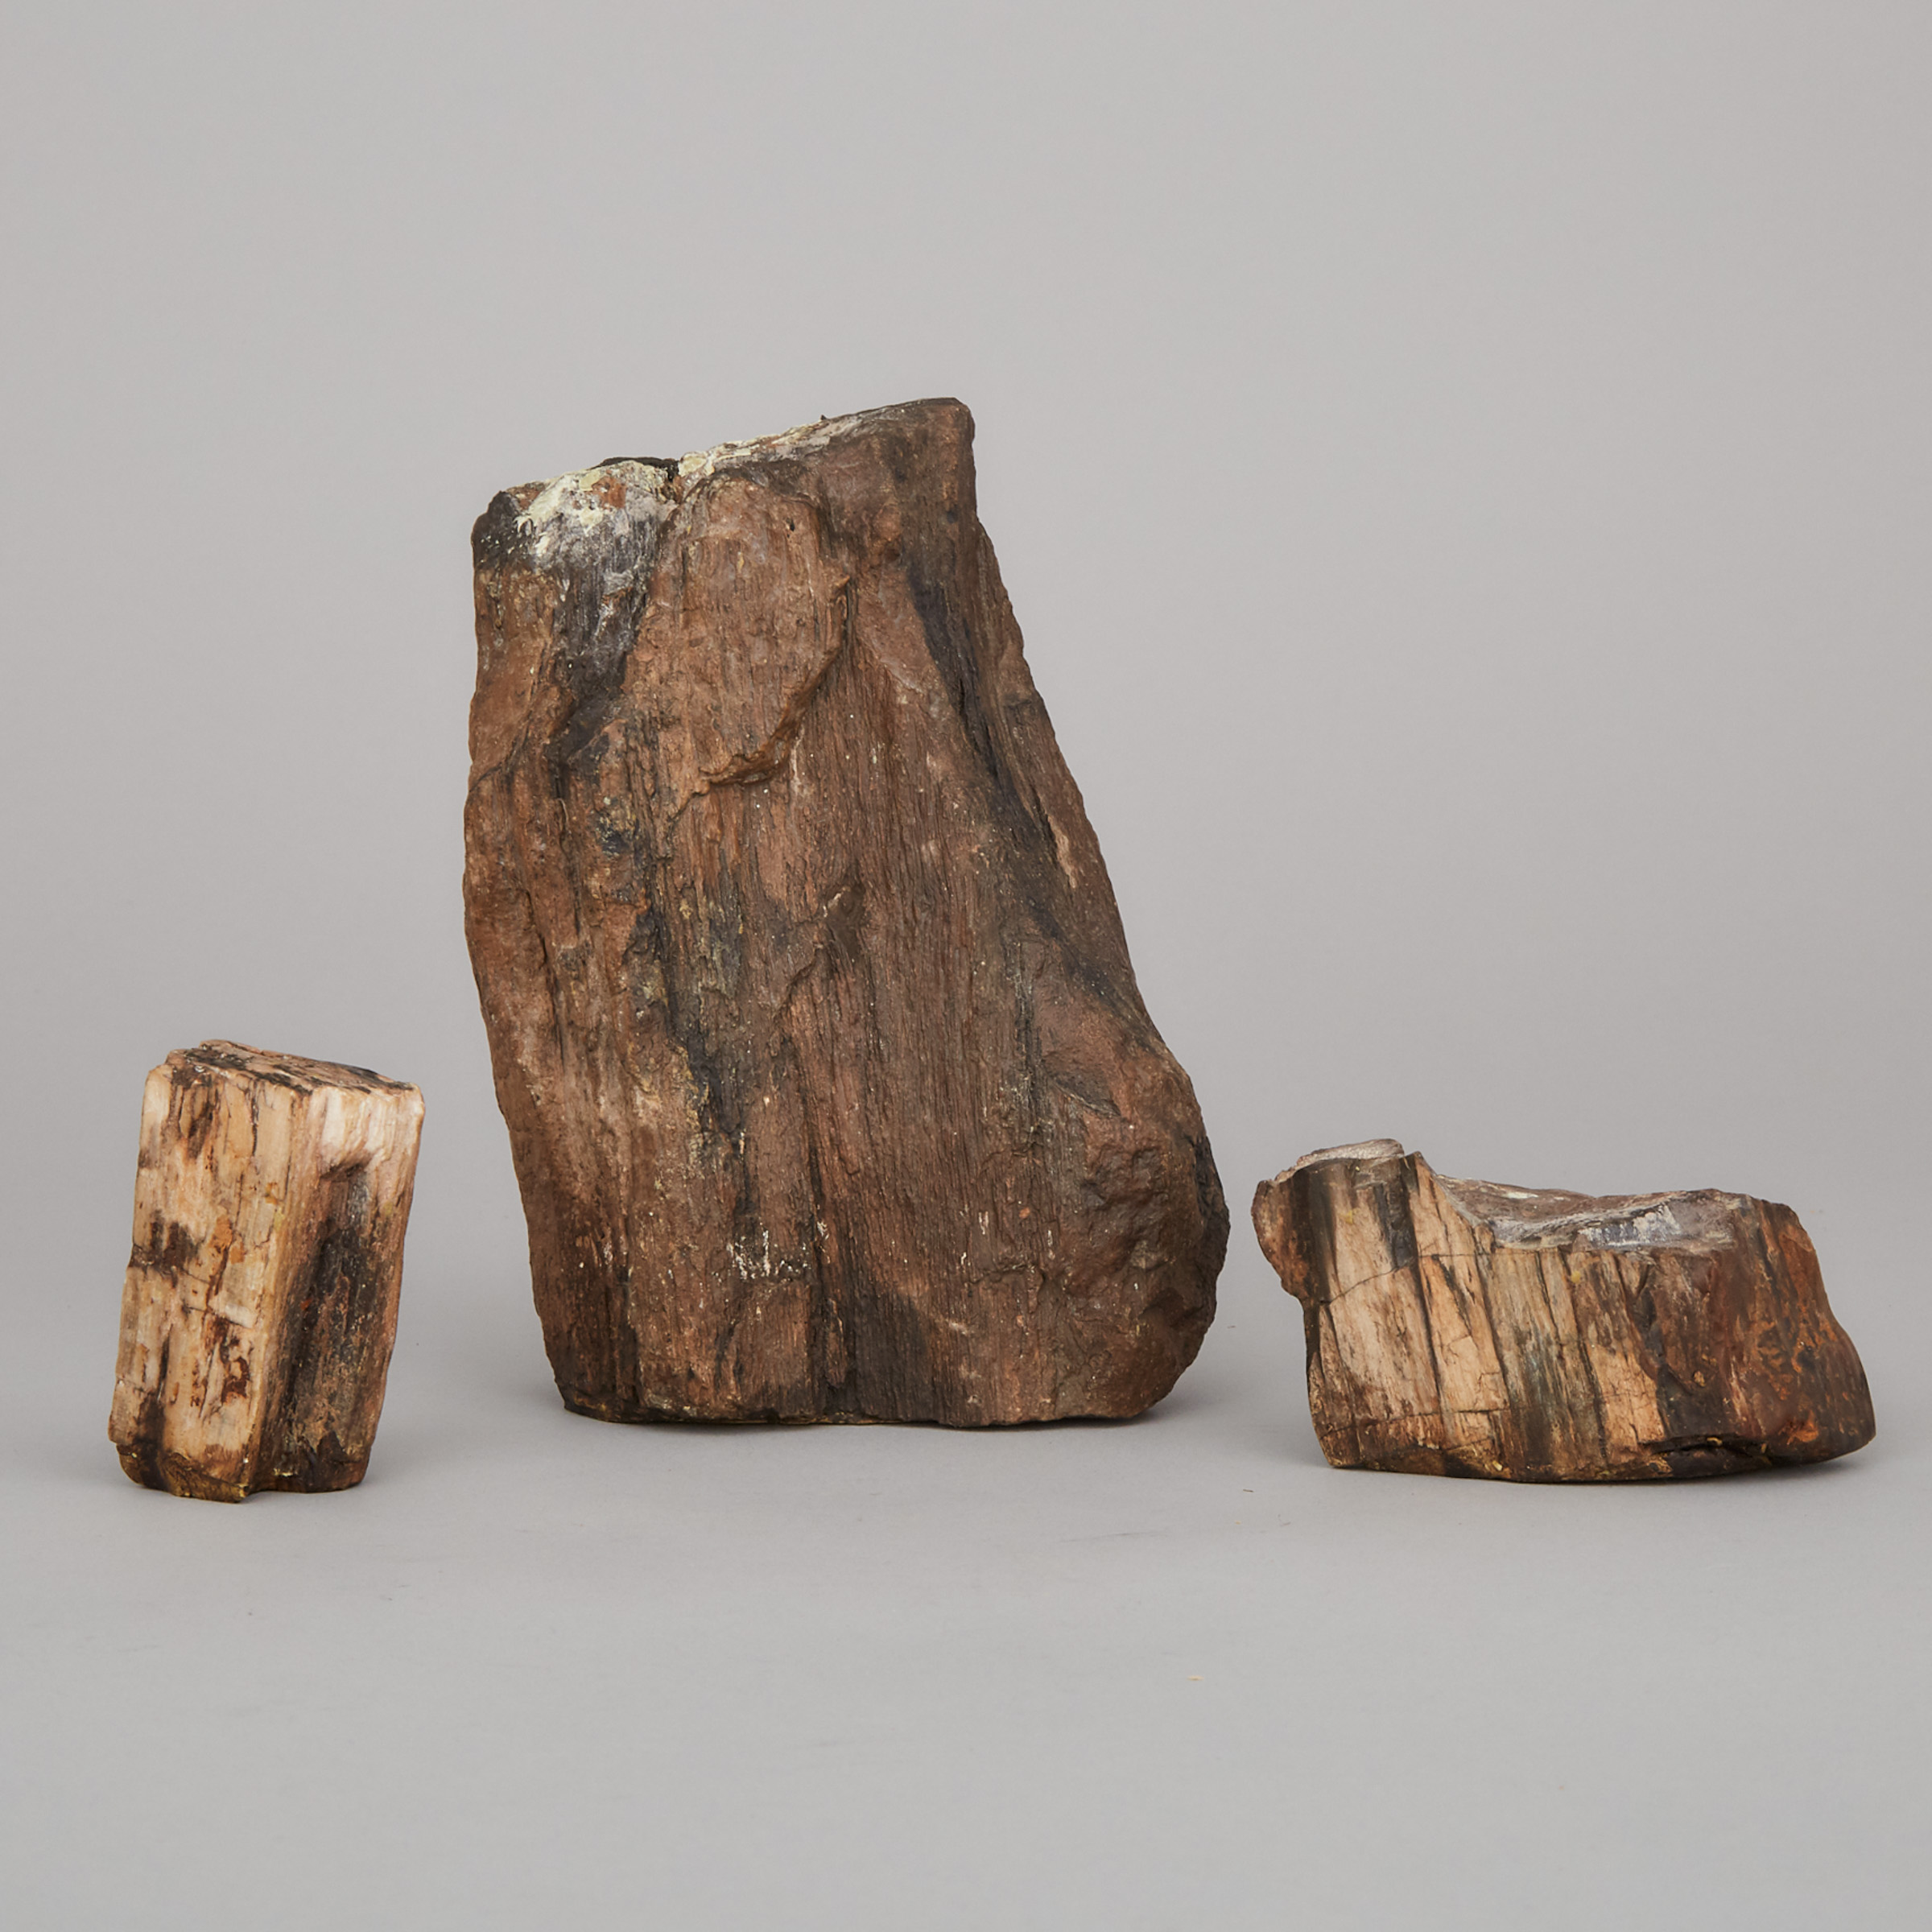 Three Pieces Petrified Wood, Late Triassic Period